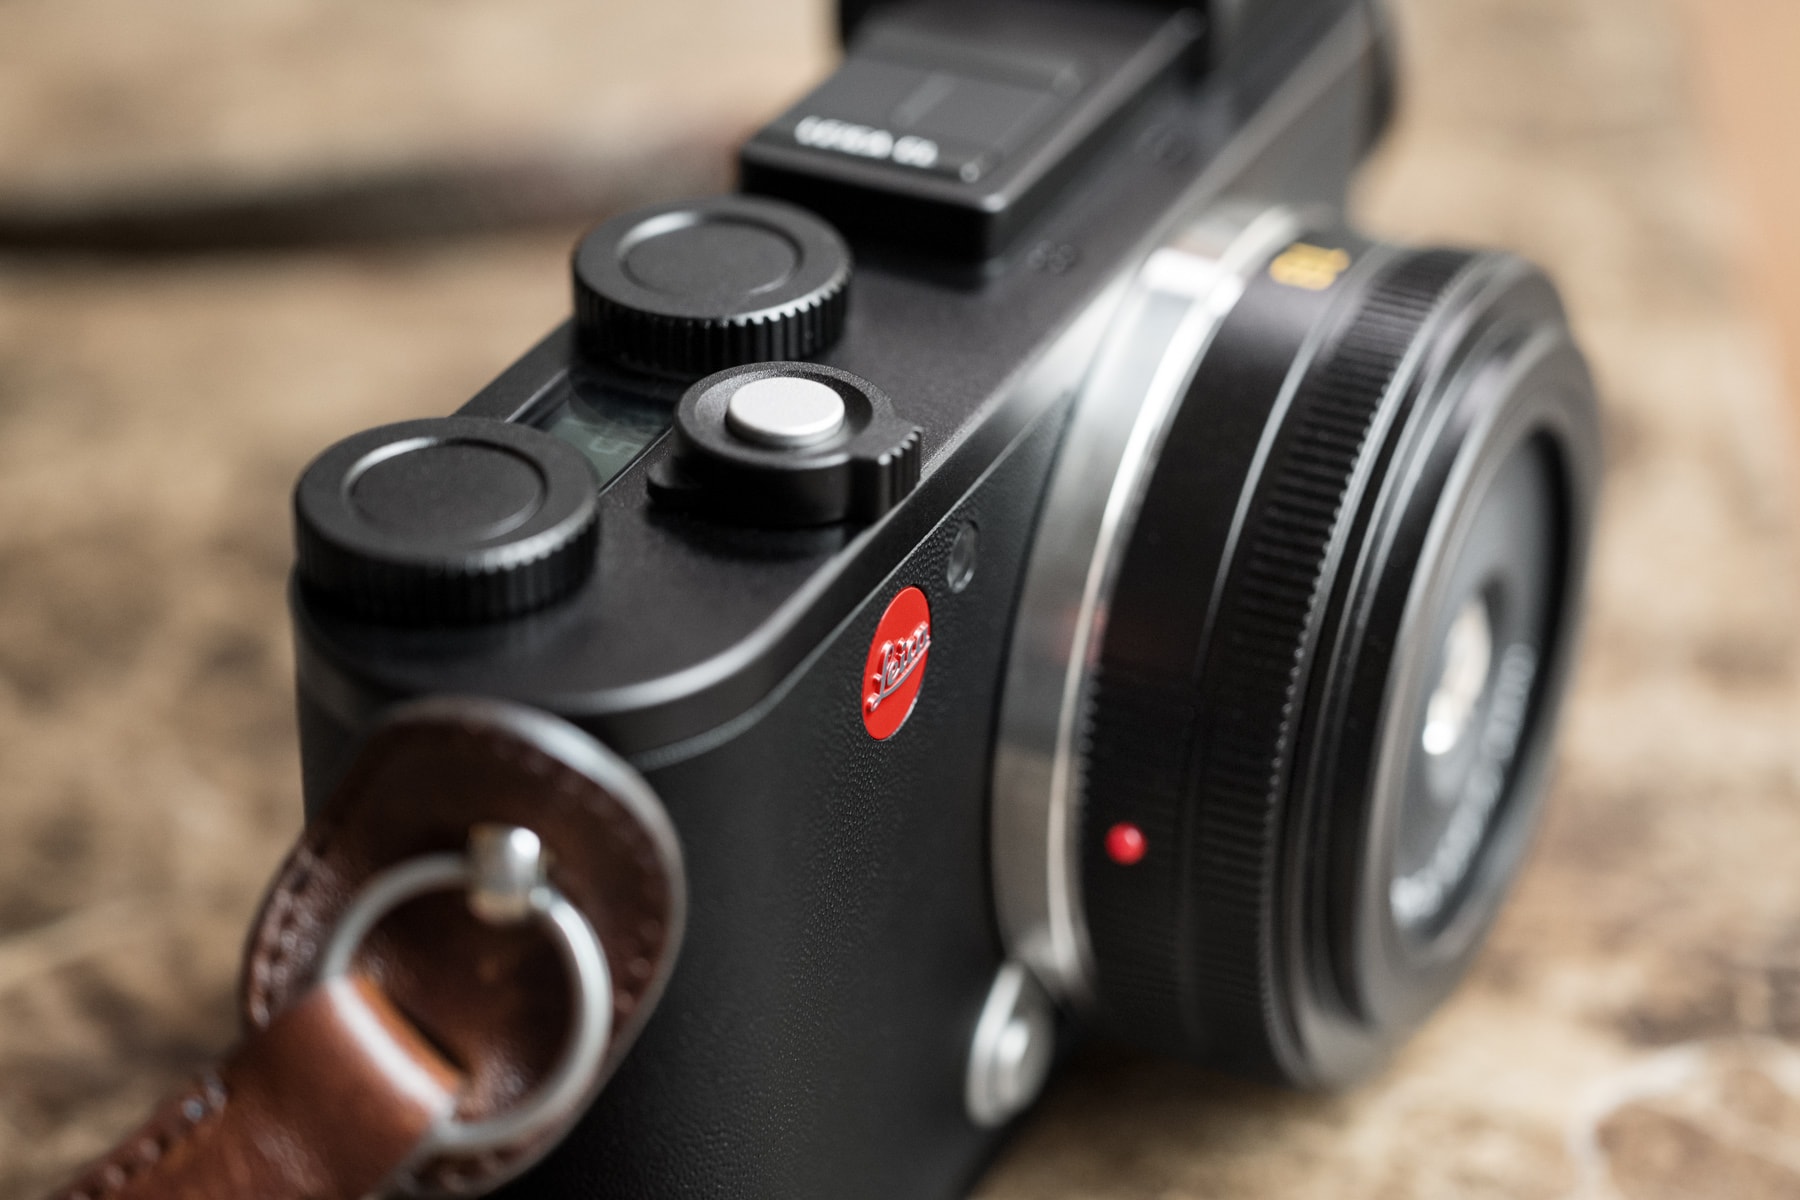 Leica 全新 APS-C 畫幅新作 Leica CL 登場